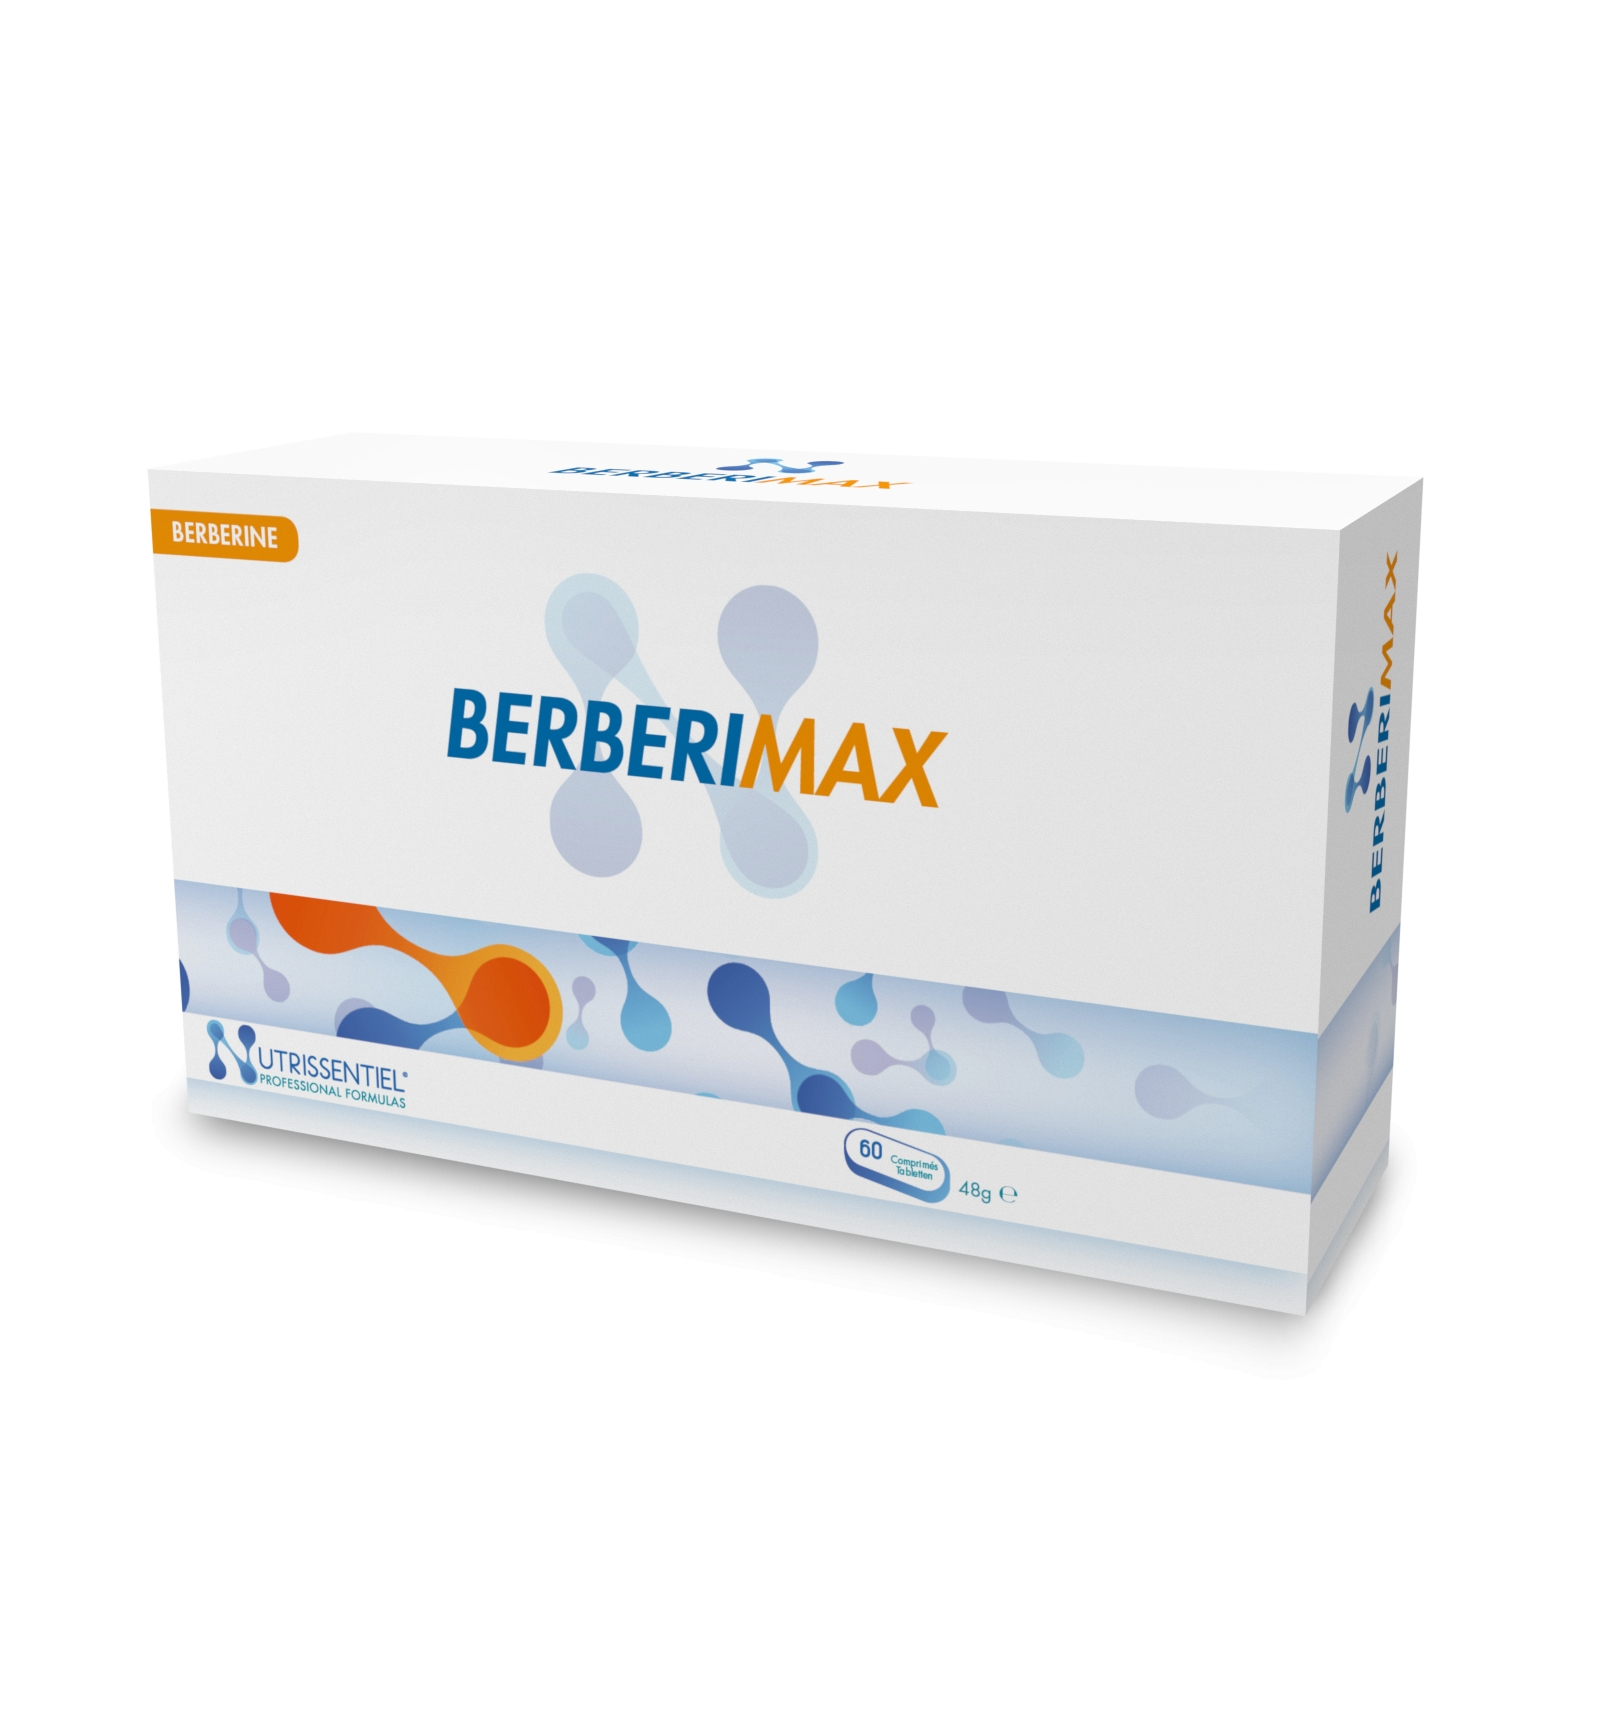 Berberimax - 60 tabl